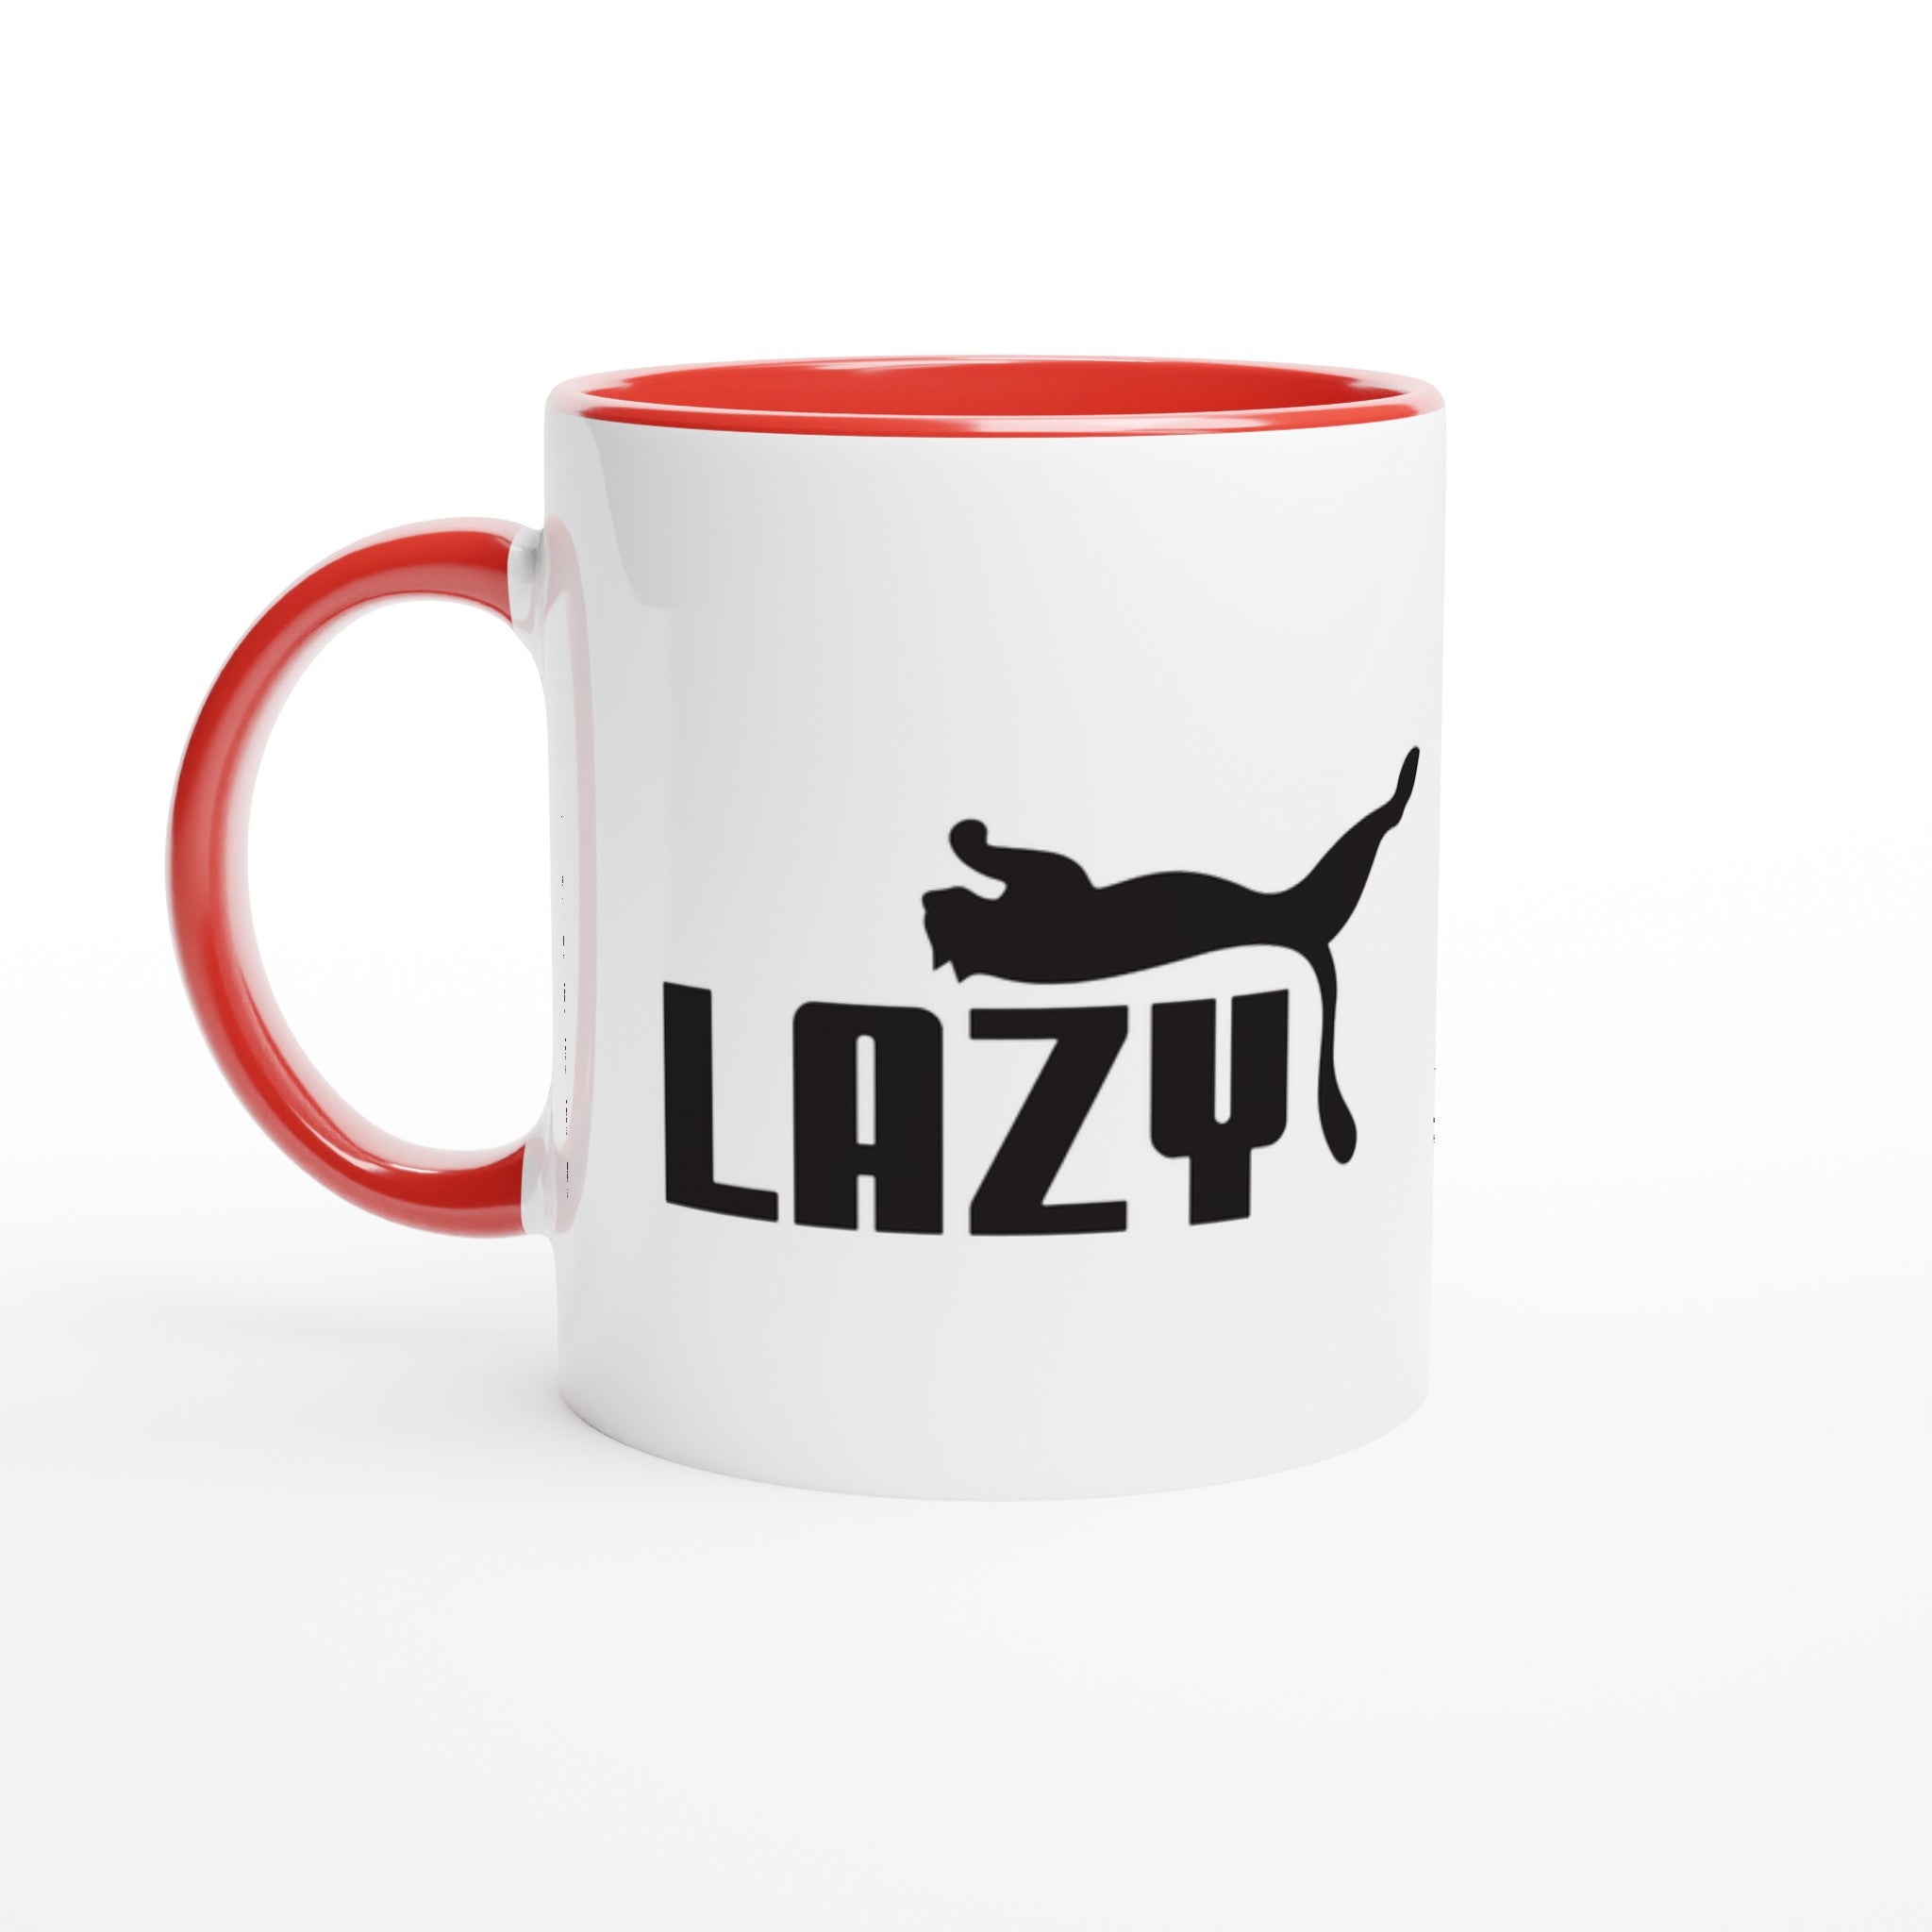 Lazy Mug - Optimalprint